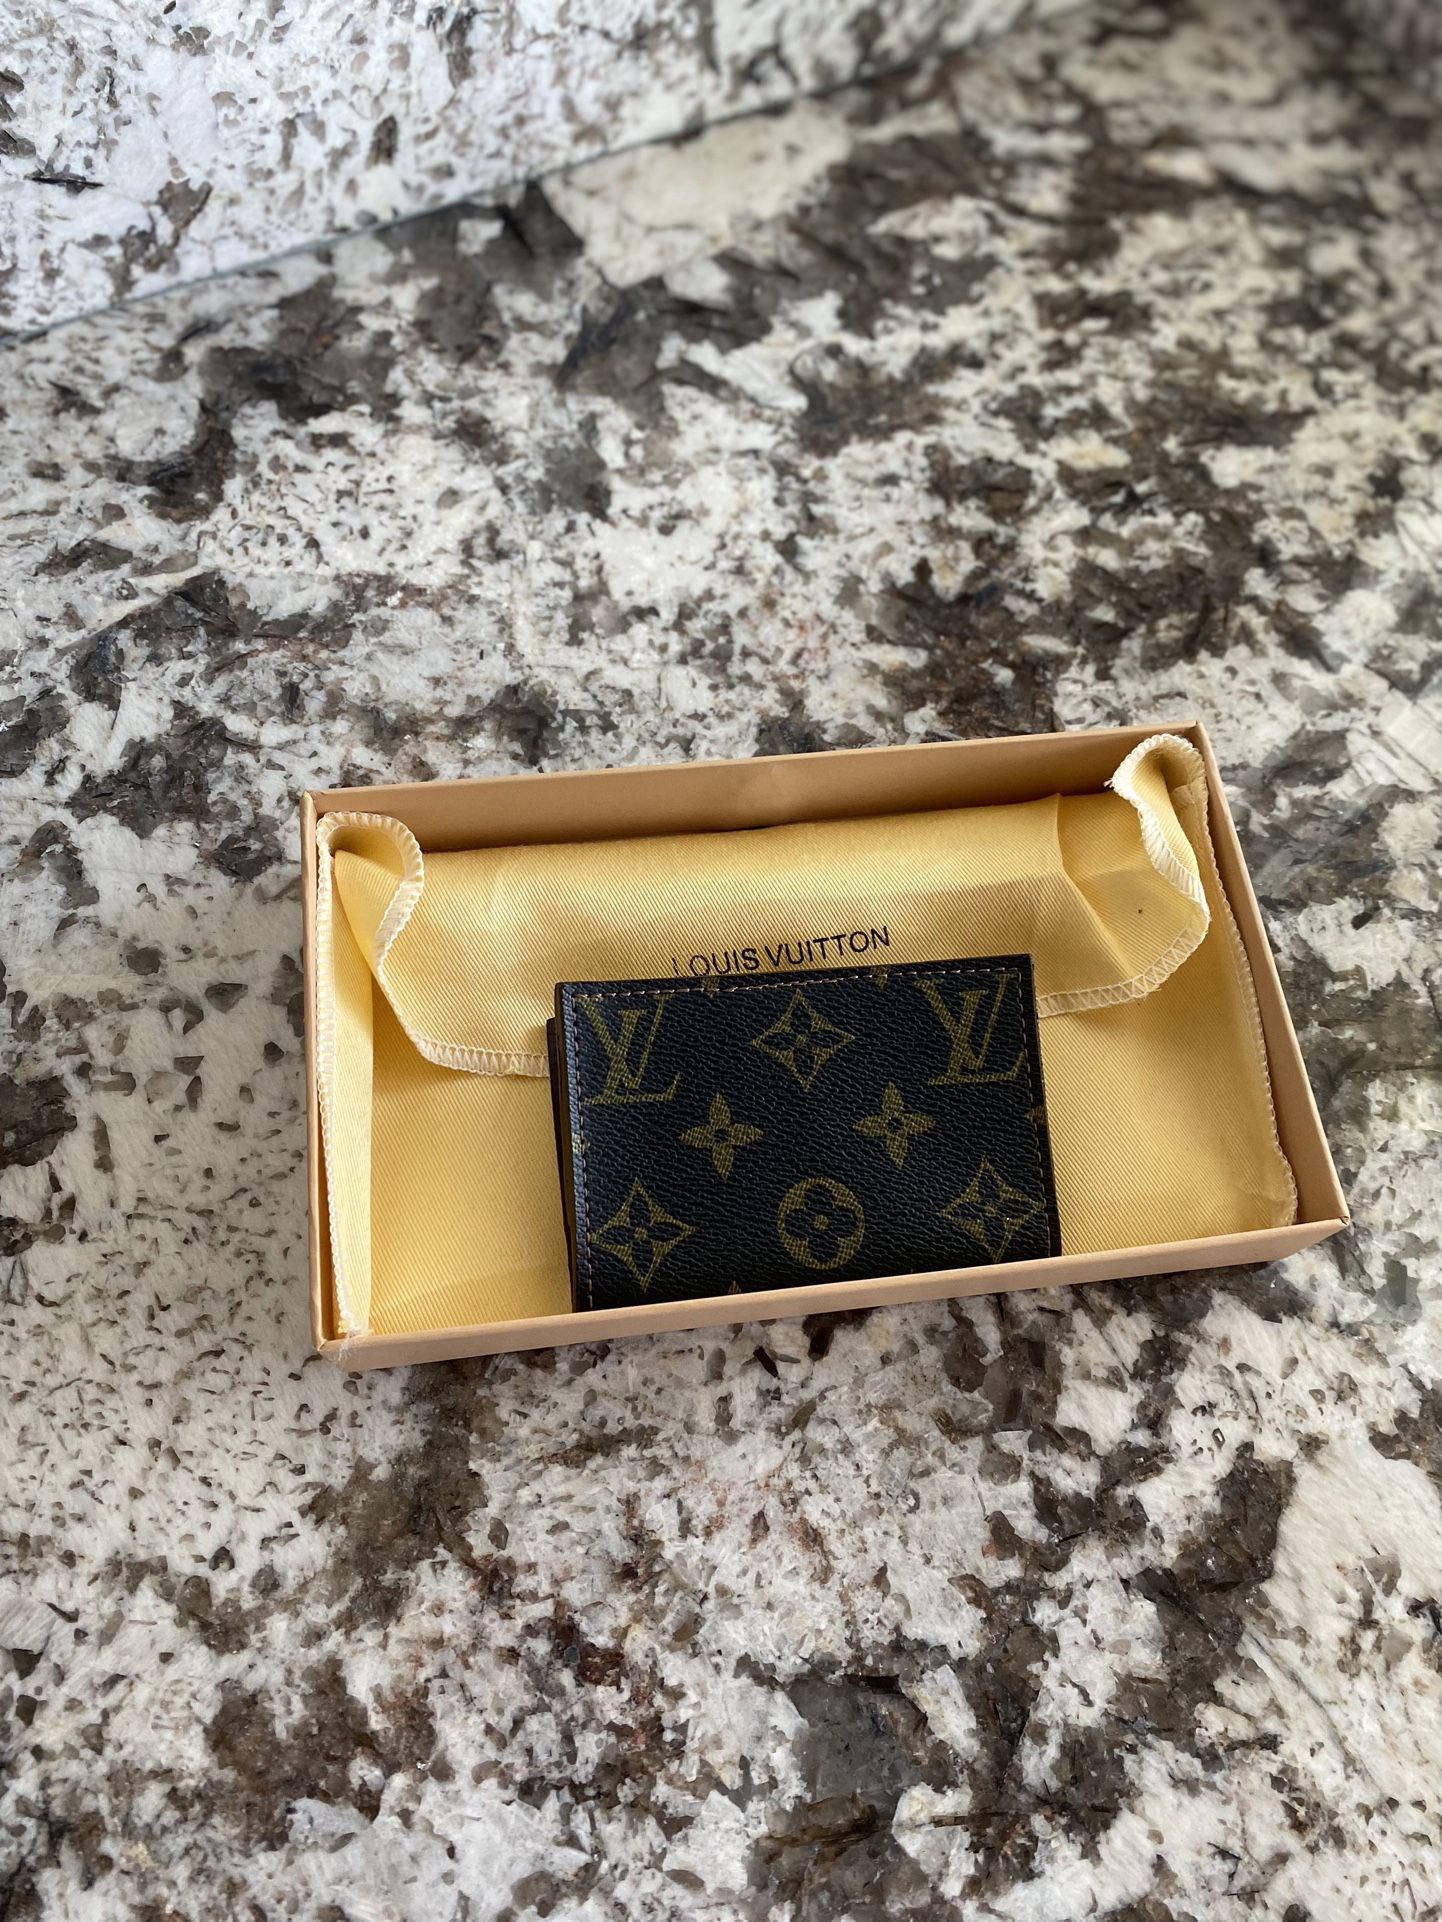 Louis Vuitton Card Holder/ Wallet for Sale in Seaside, CA - OfferUp